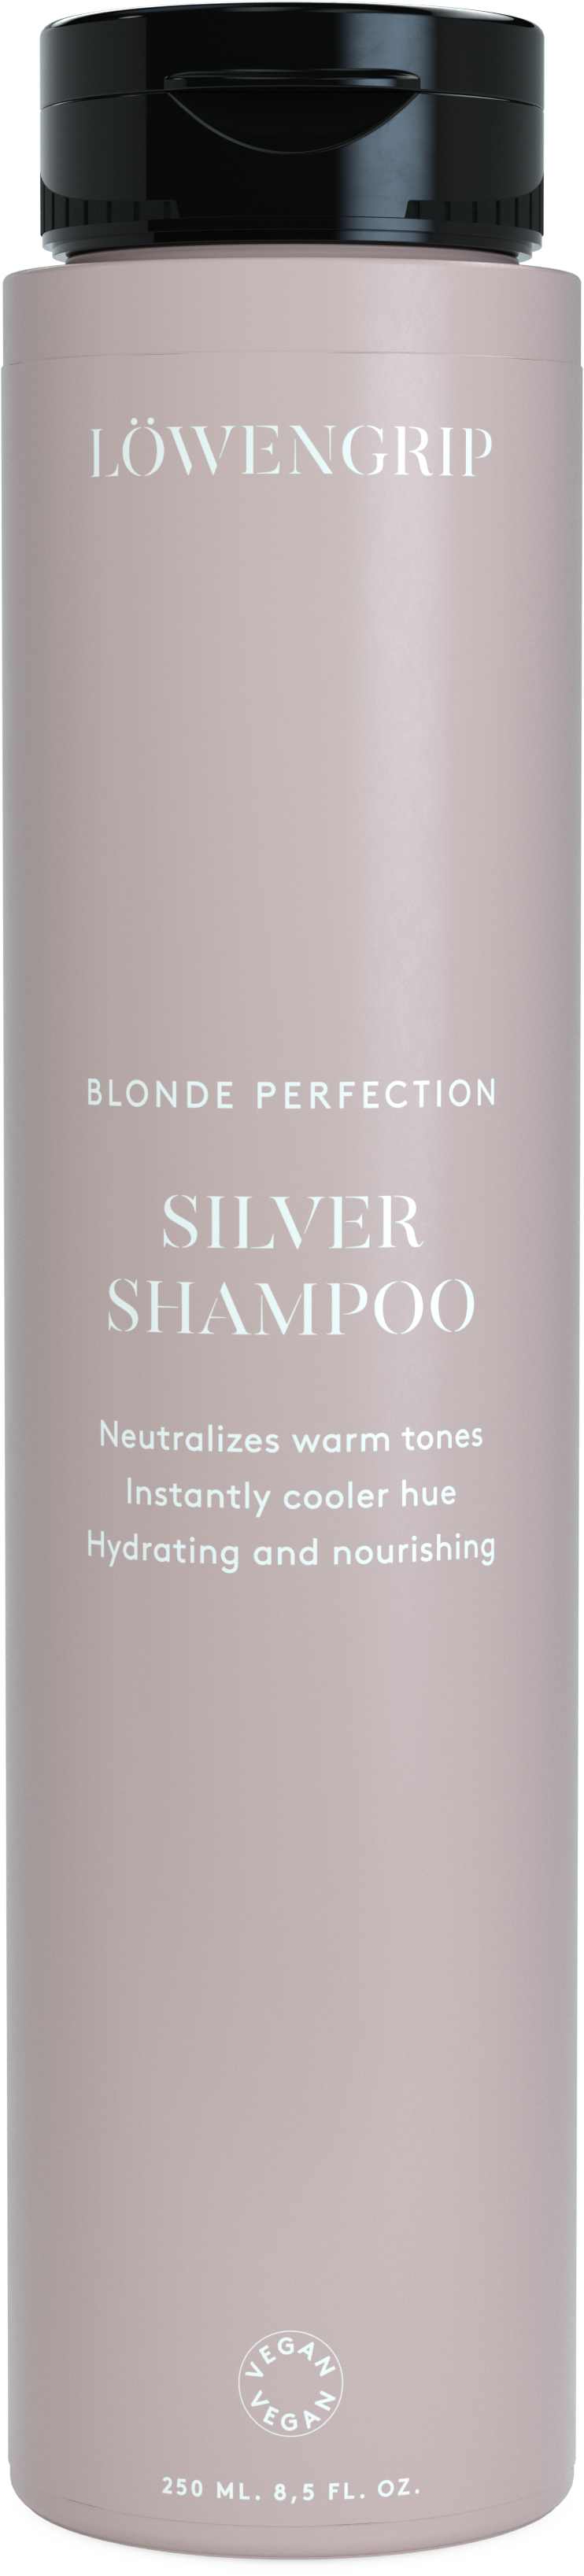 Blonde Perfection - Shampoo Löwengrip